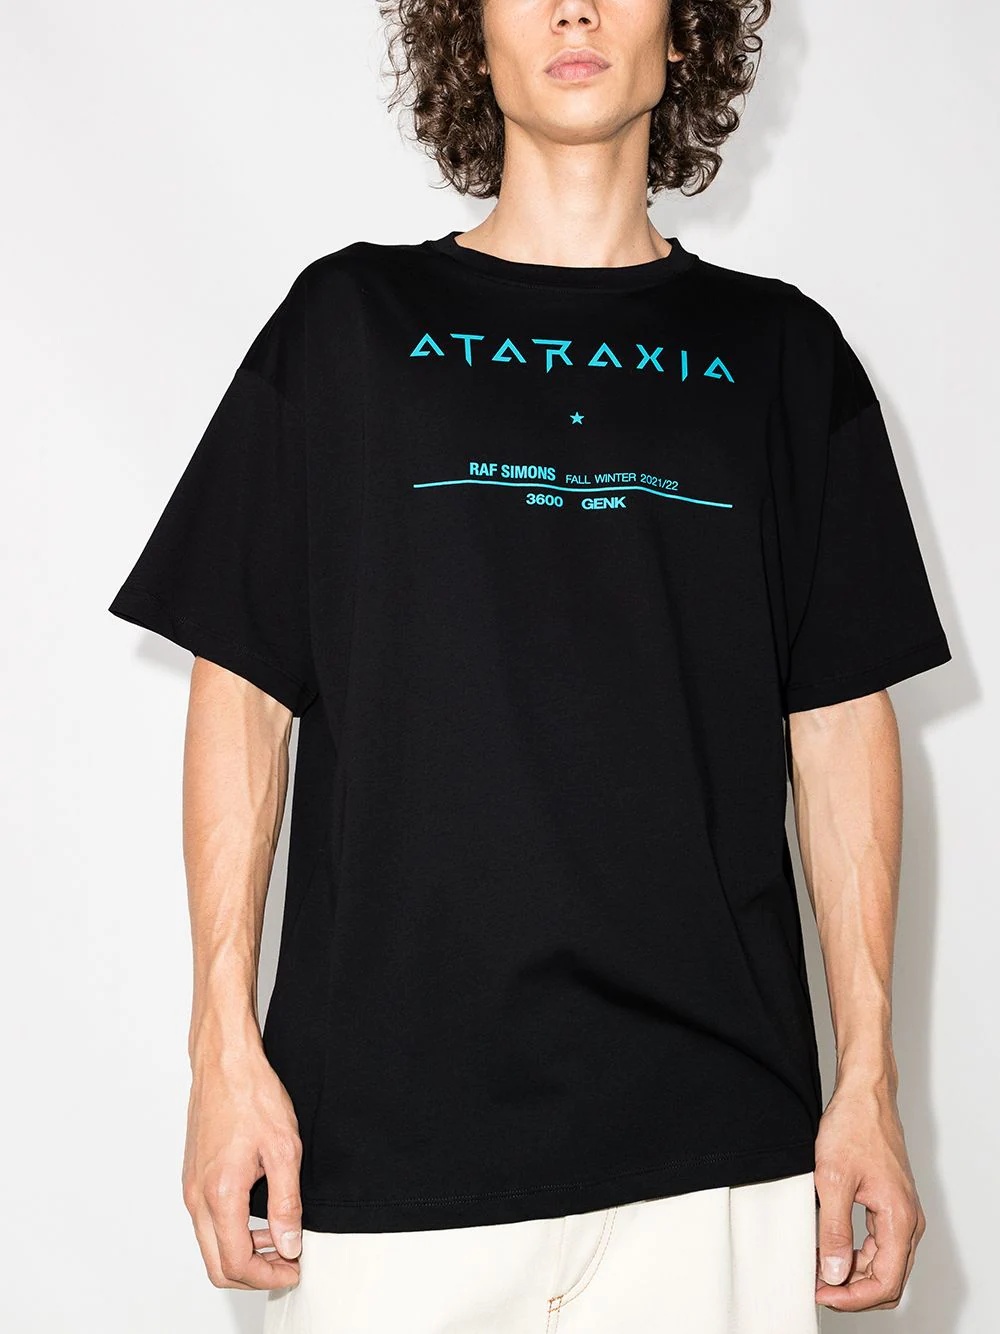 Ataraxia Tour cotton T-shirt - 2